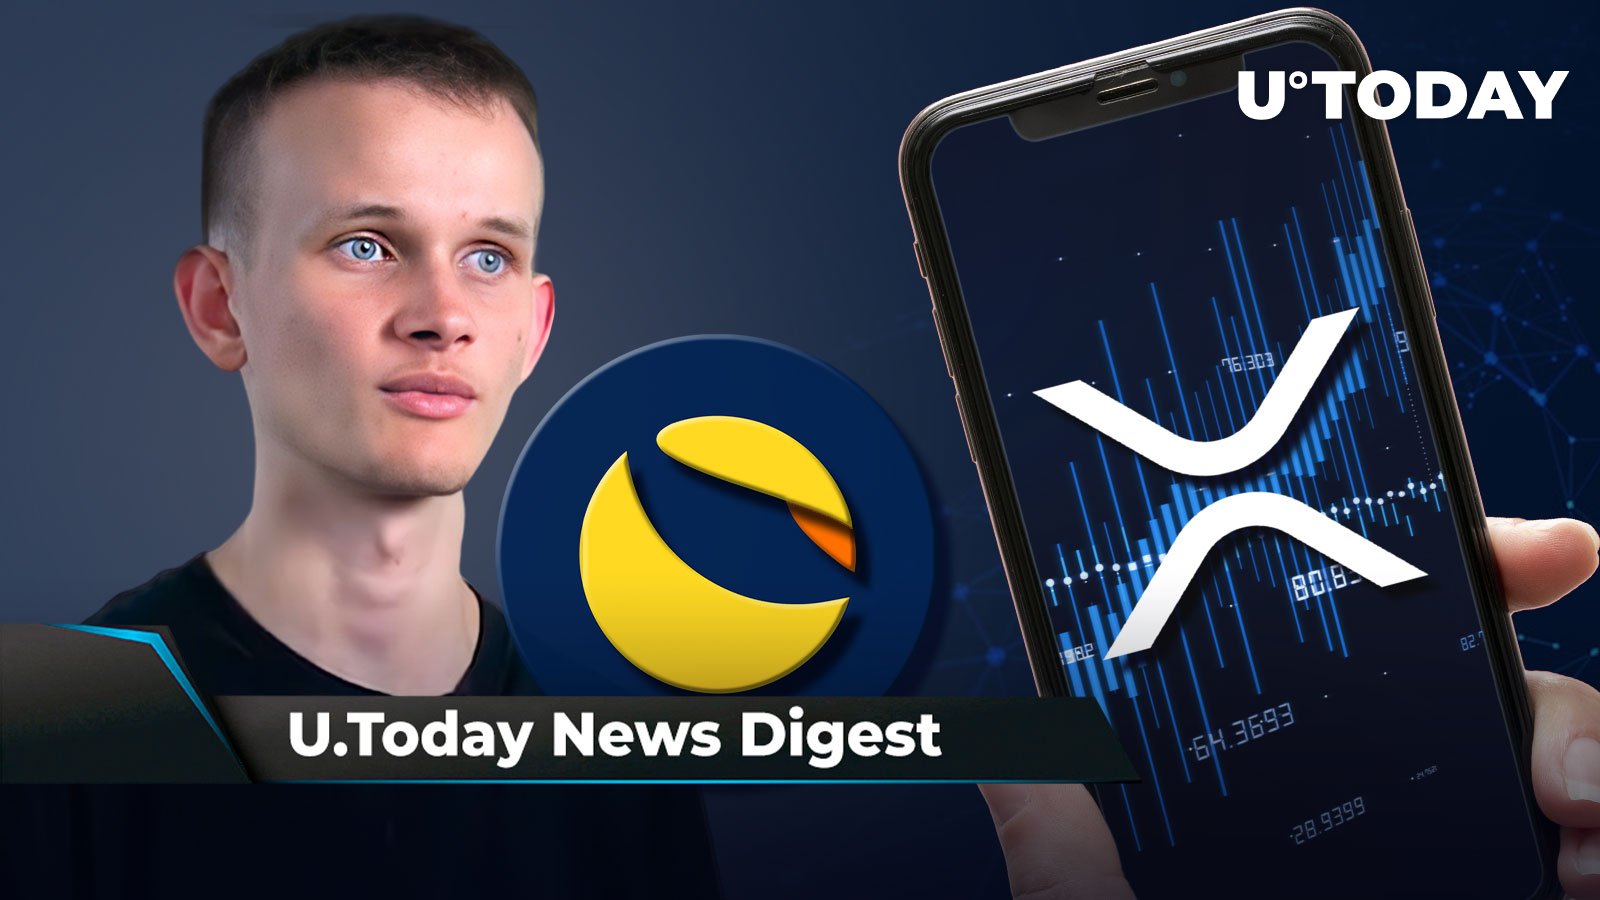 Crypto News Digest توسط U.Today